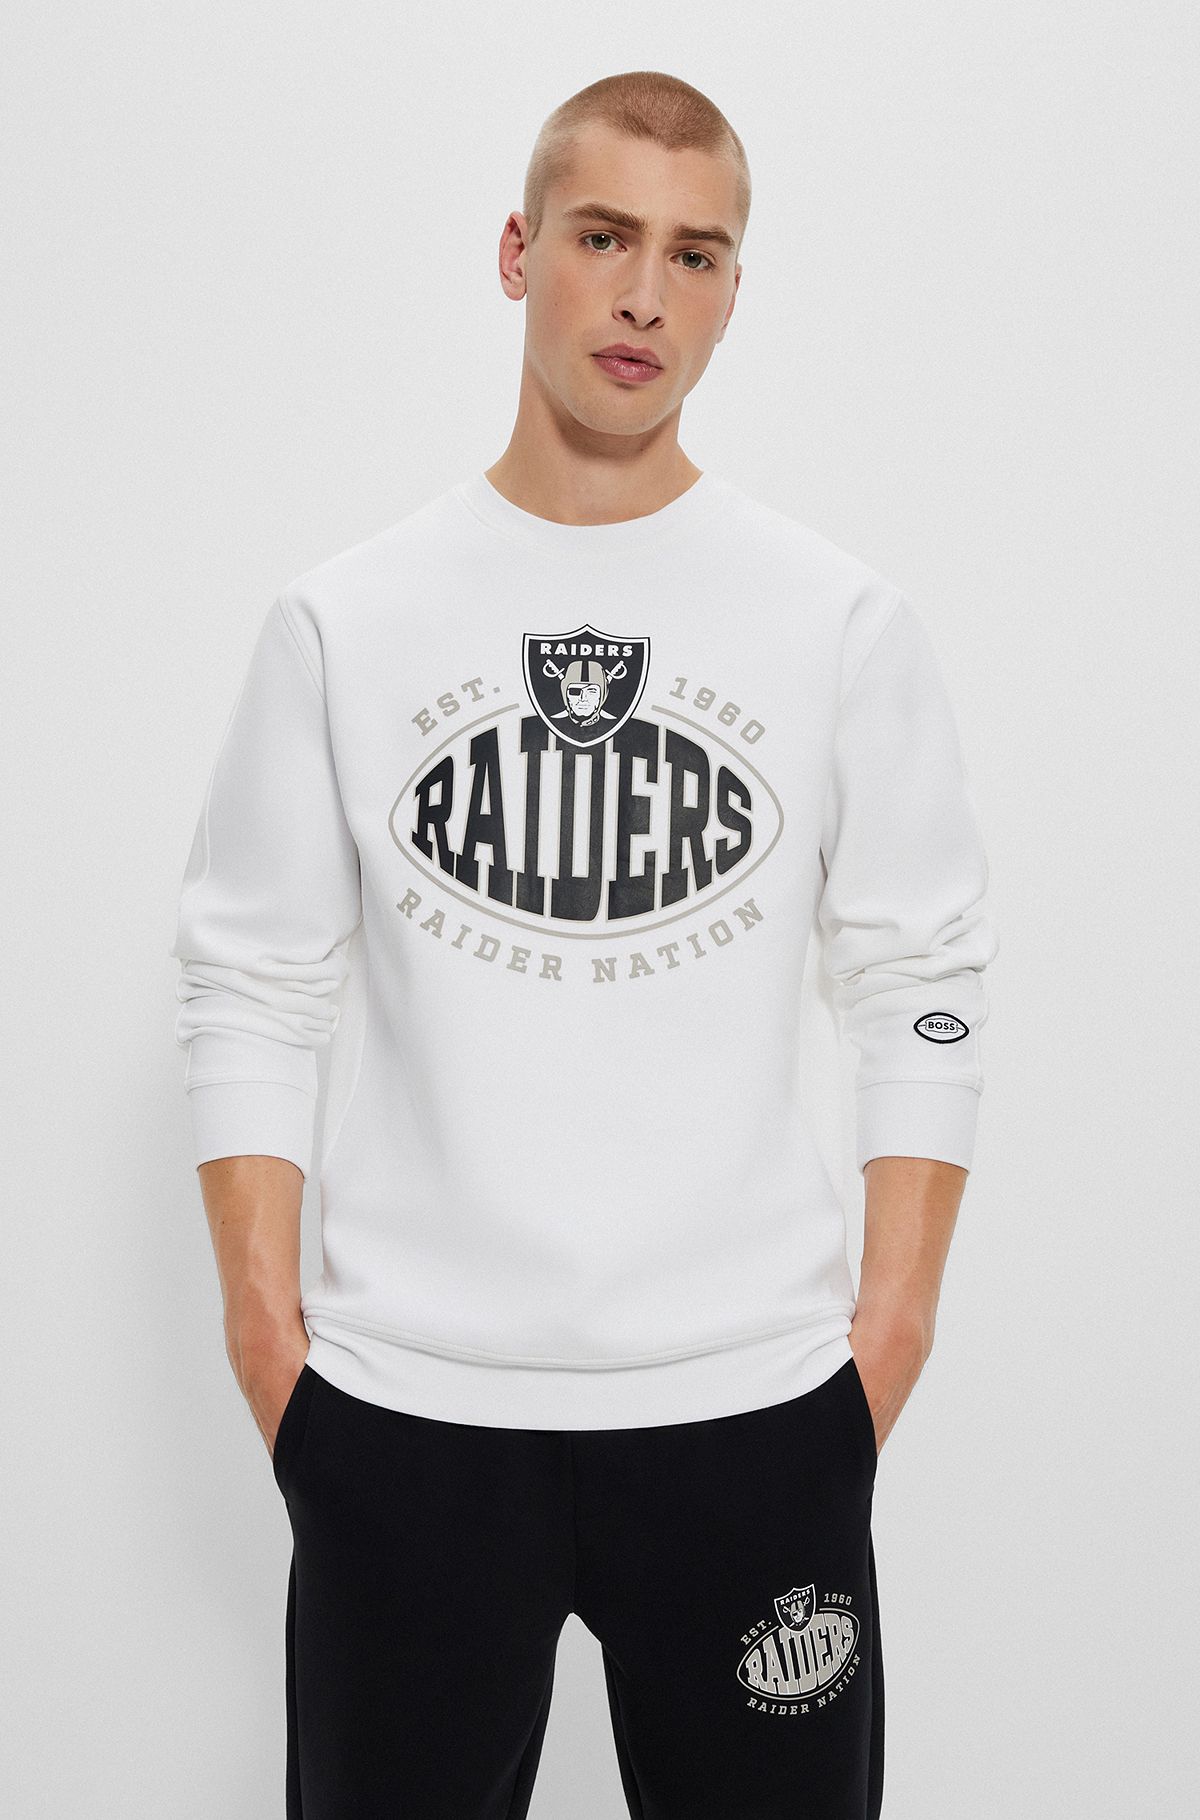 BOSS x NFL cotton-blend sweatshirt with collaborative branding, Raiders